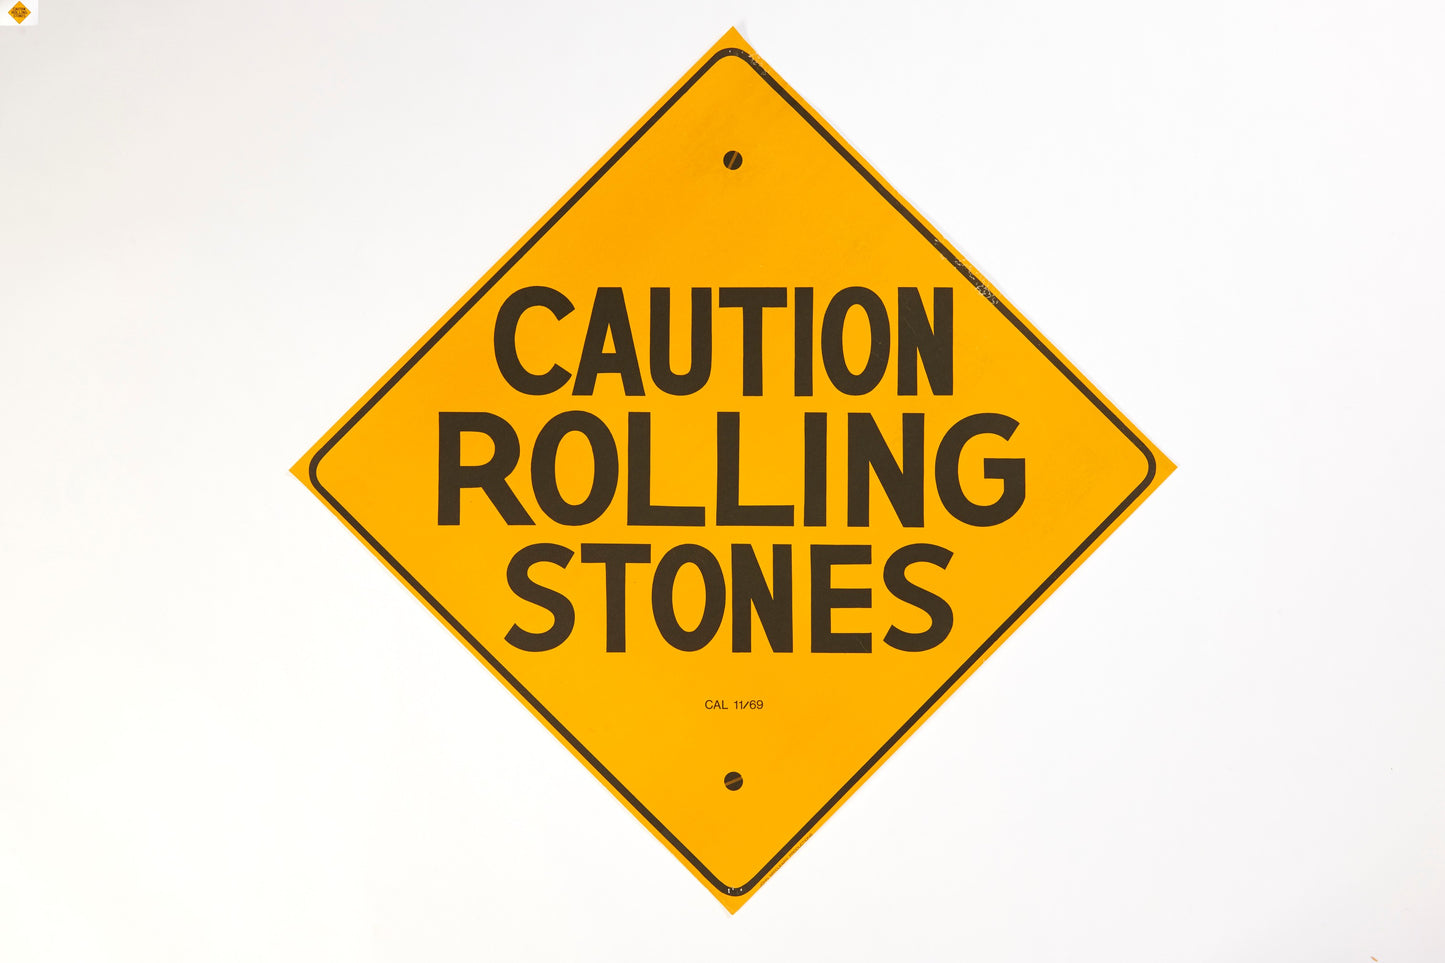 Caution Rolling Stones - Vintage Original Altamont Concert Poster, 1969